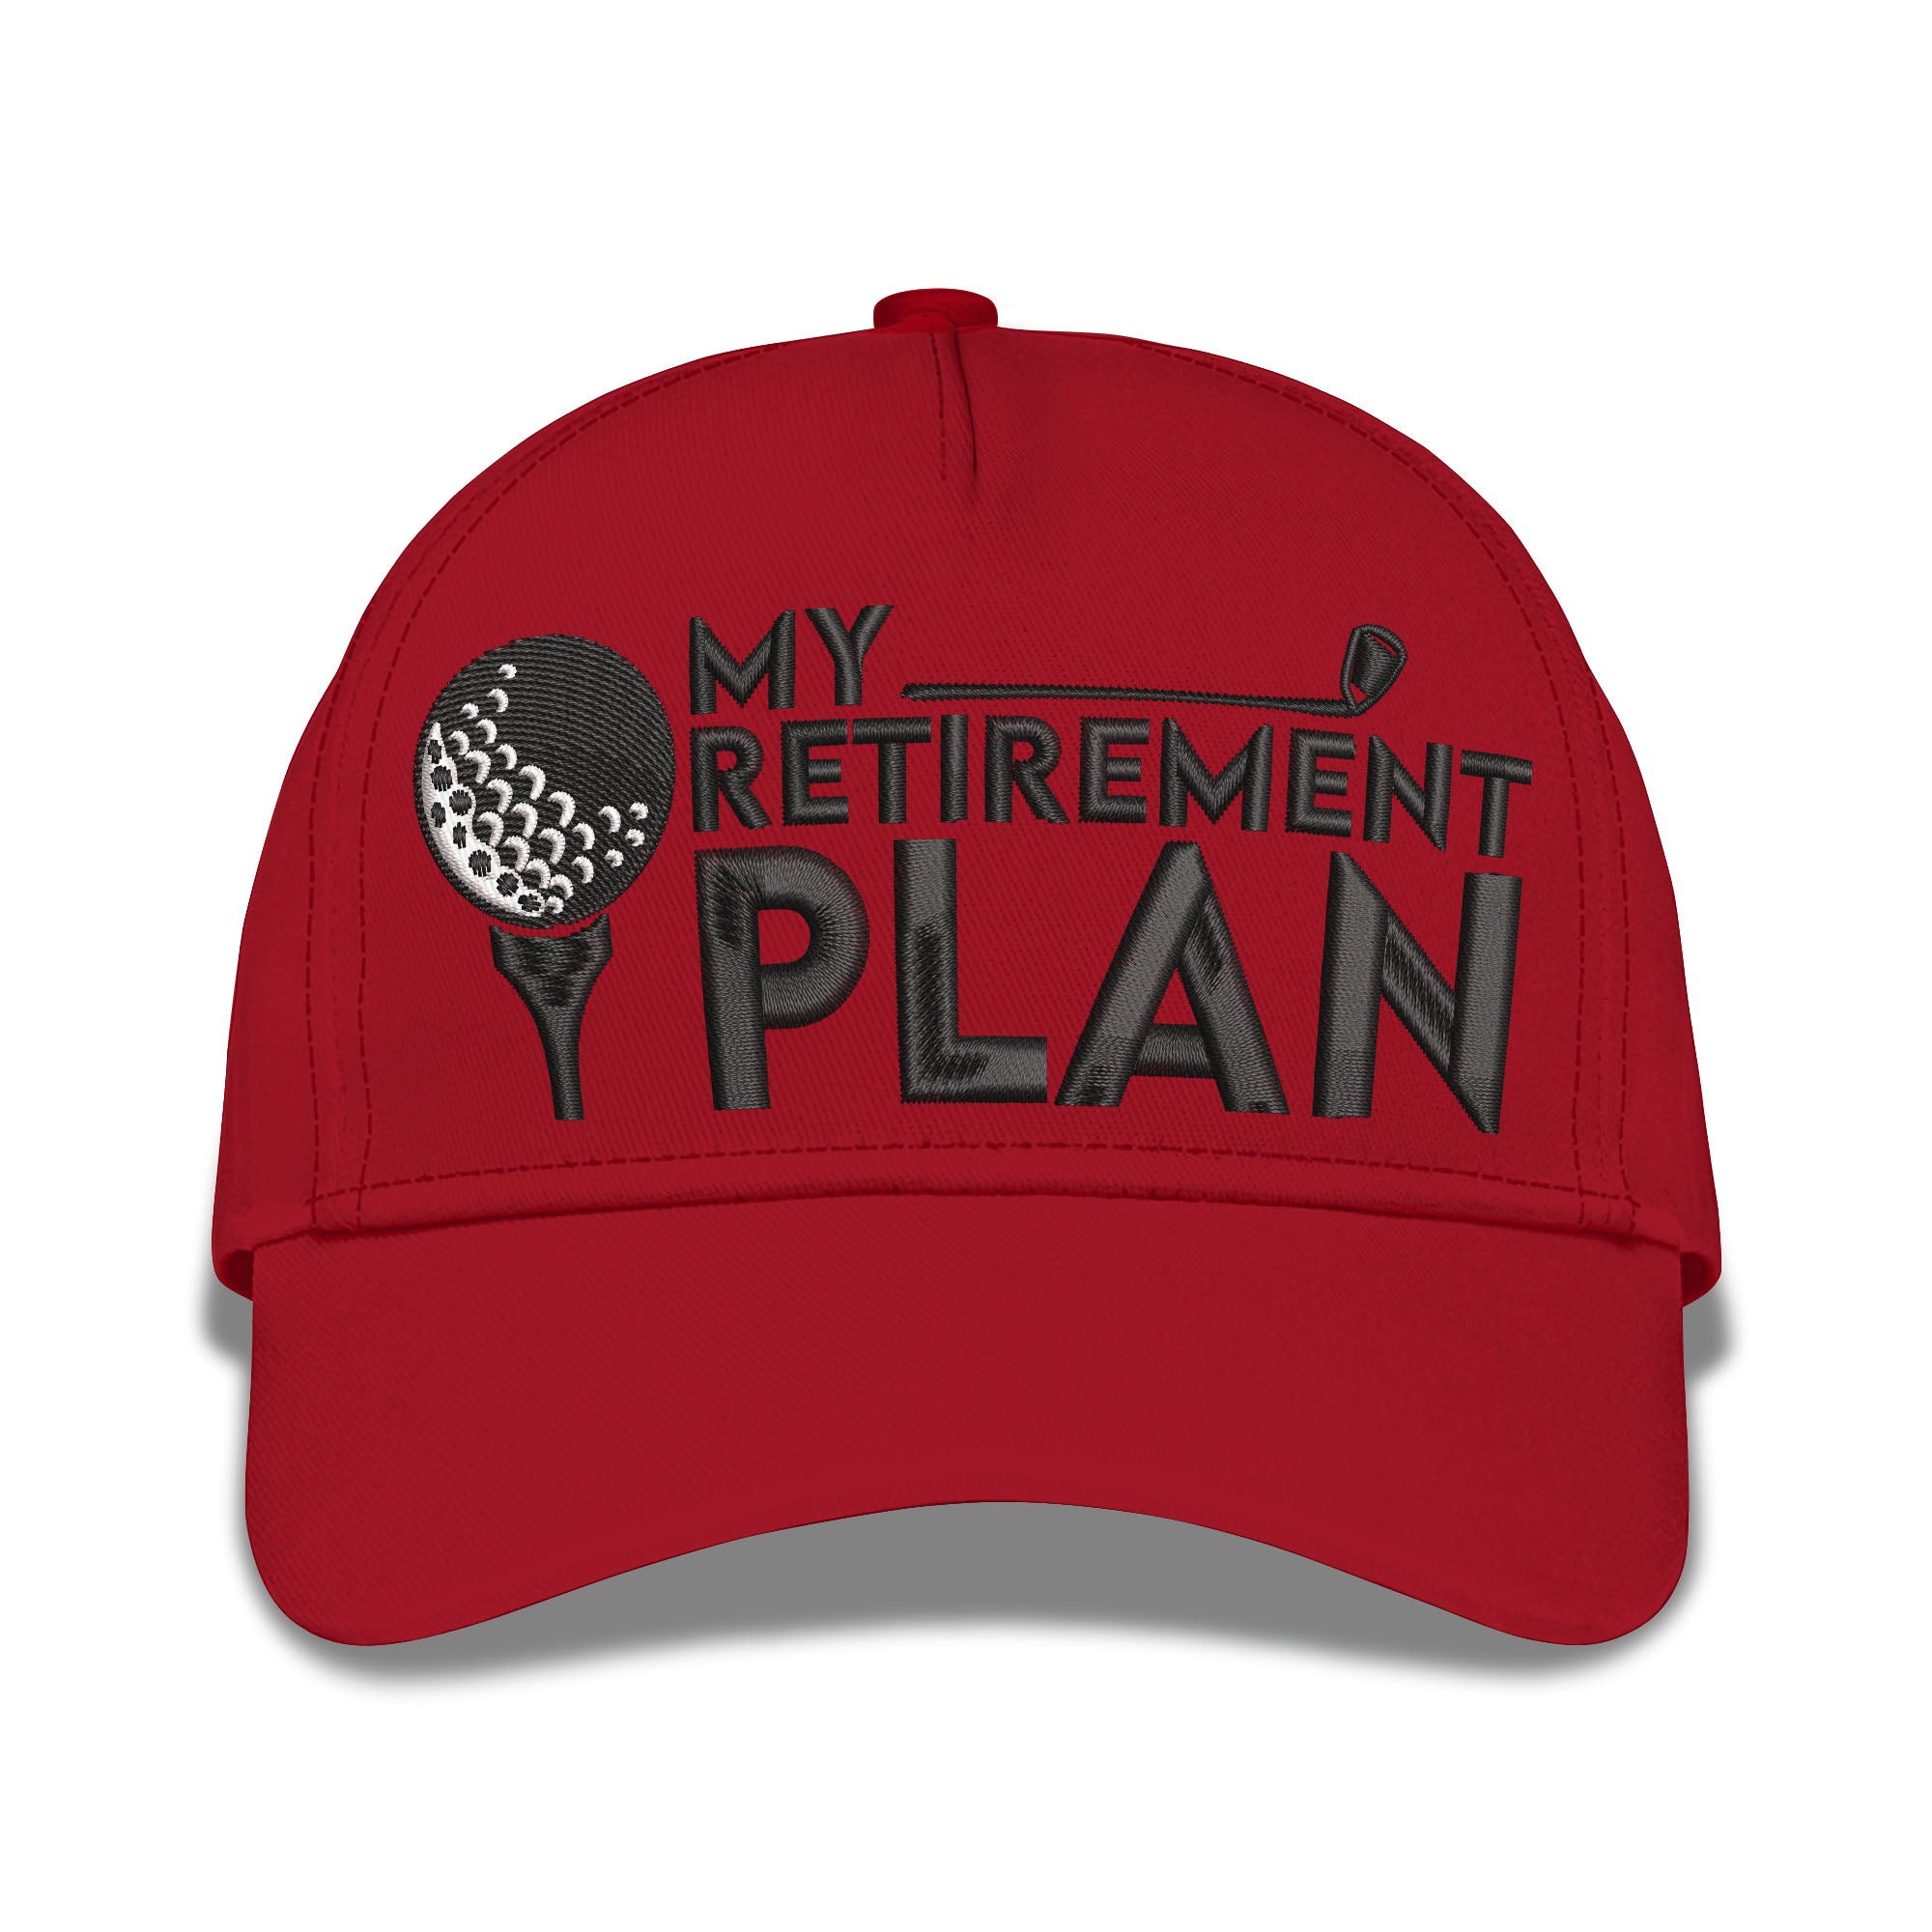 My Retirement Plan Embroidered Baseball Caps